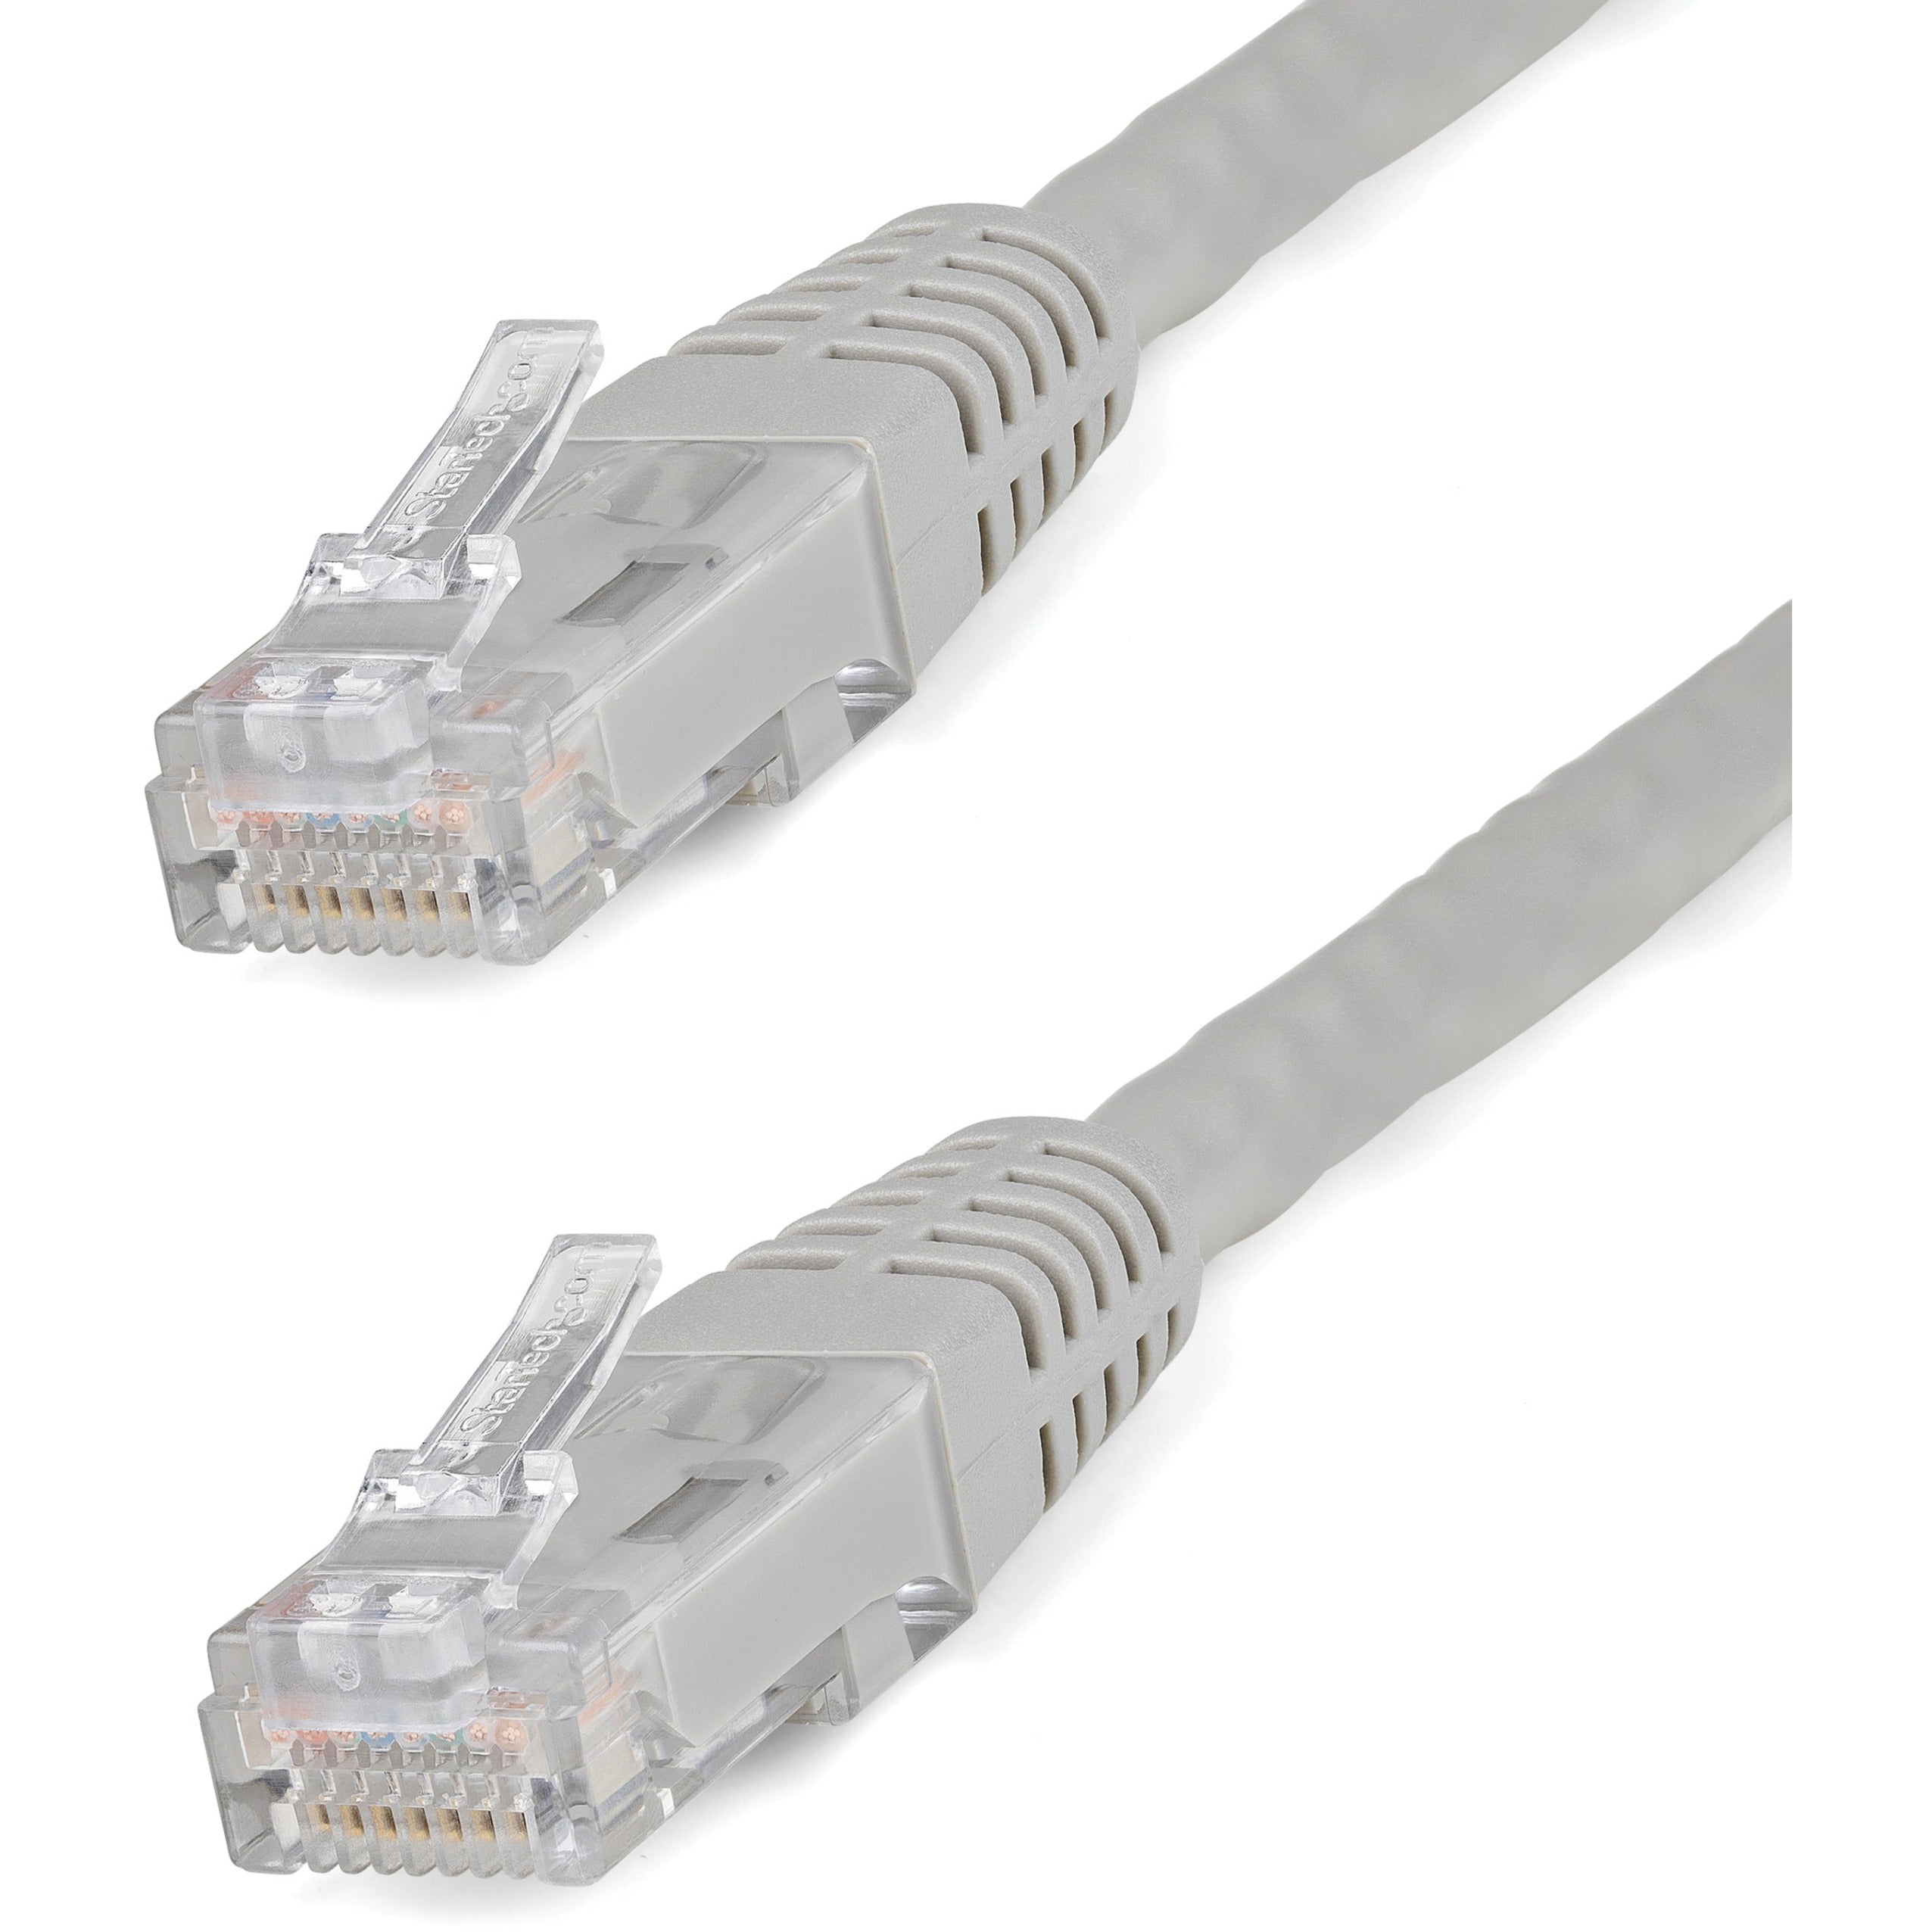 StarTech.com C6PATCH50GR 50ft Gray Cat6 UTP Patch Cable ETL Verified, 10 Gbit/s Data Transfer Rate, Strain Relief